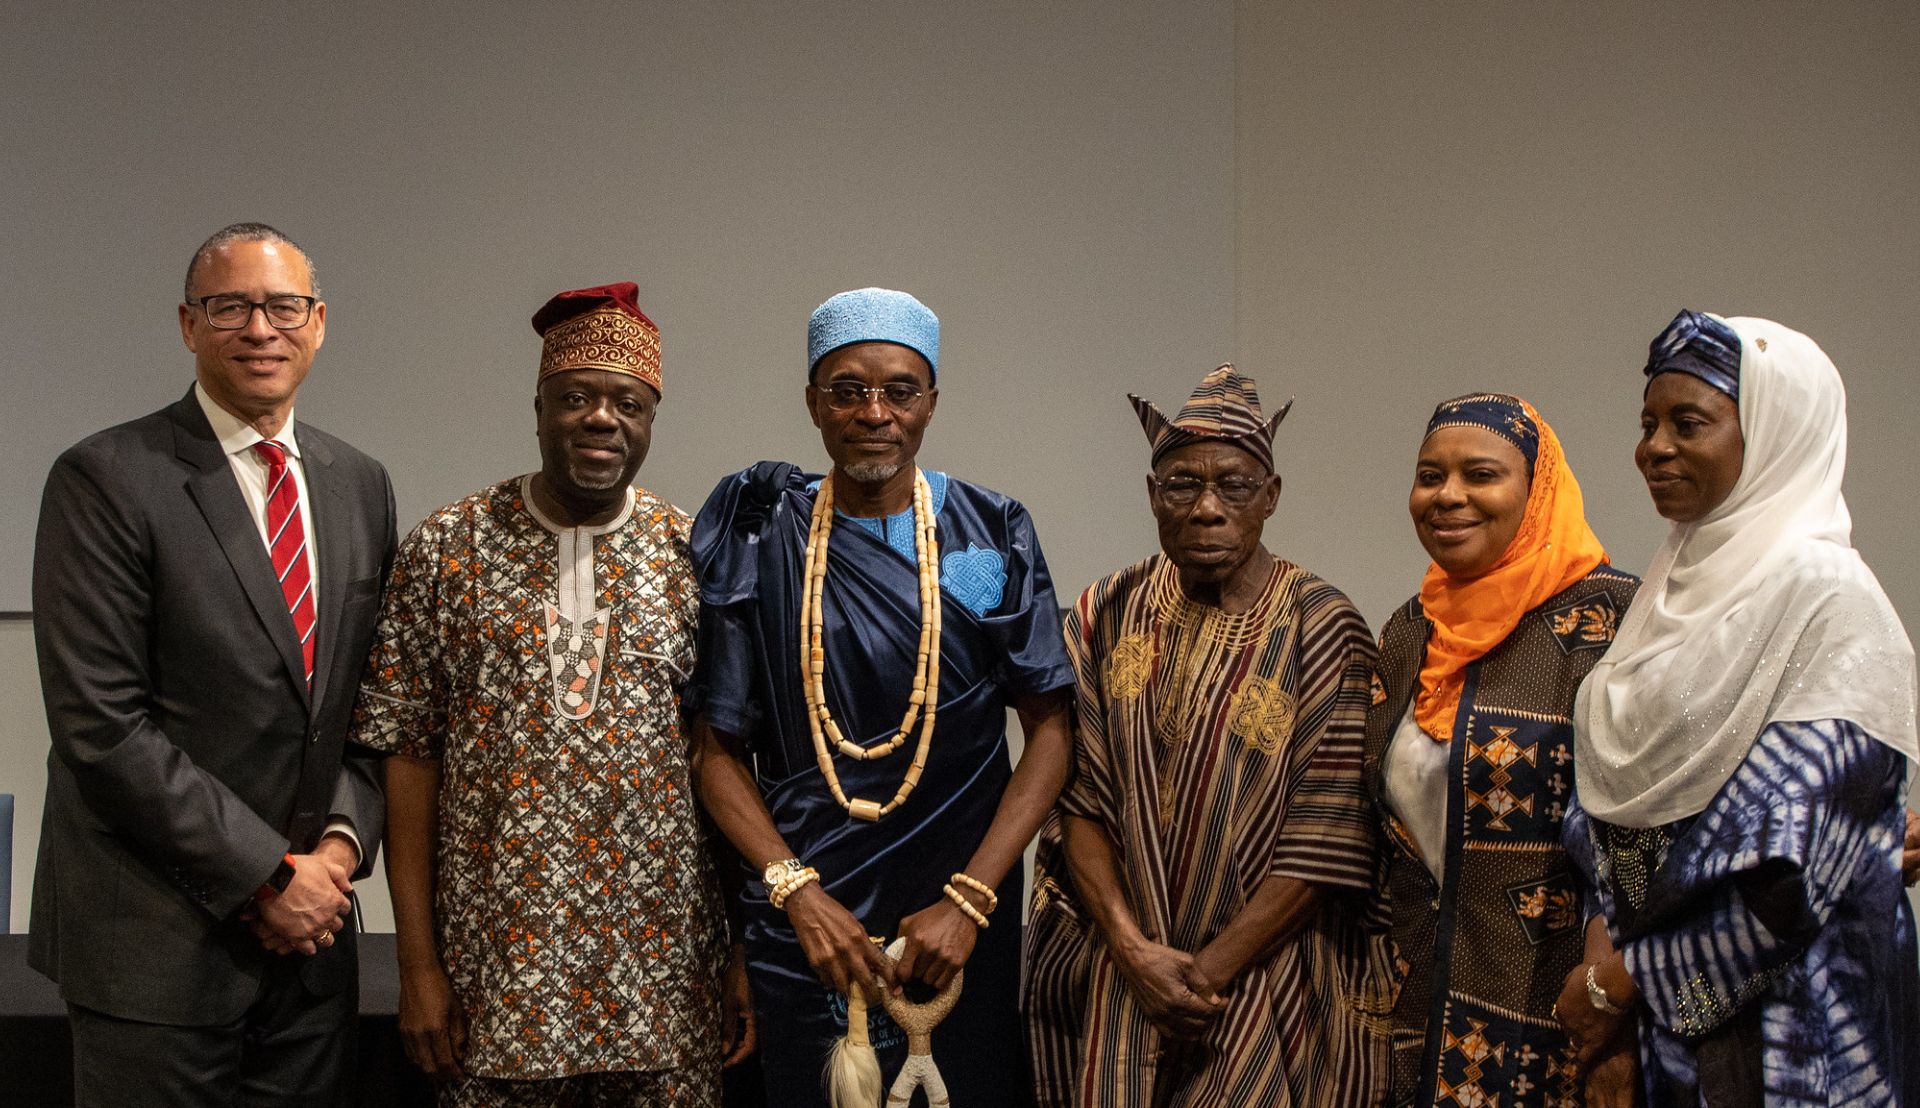 Rutgers Hosts Nigerian Delegation, group photo